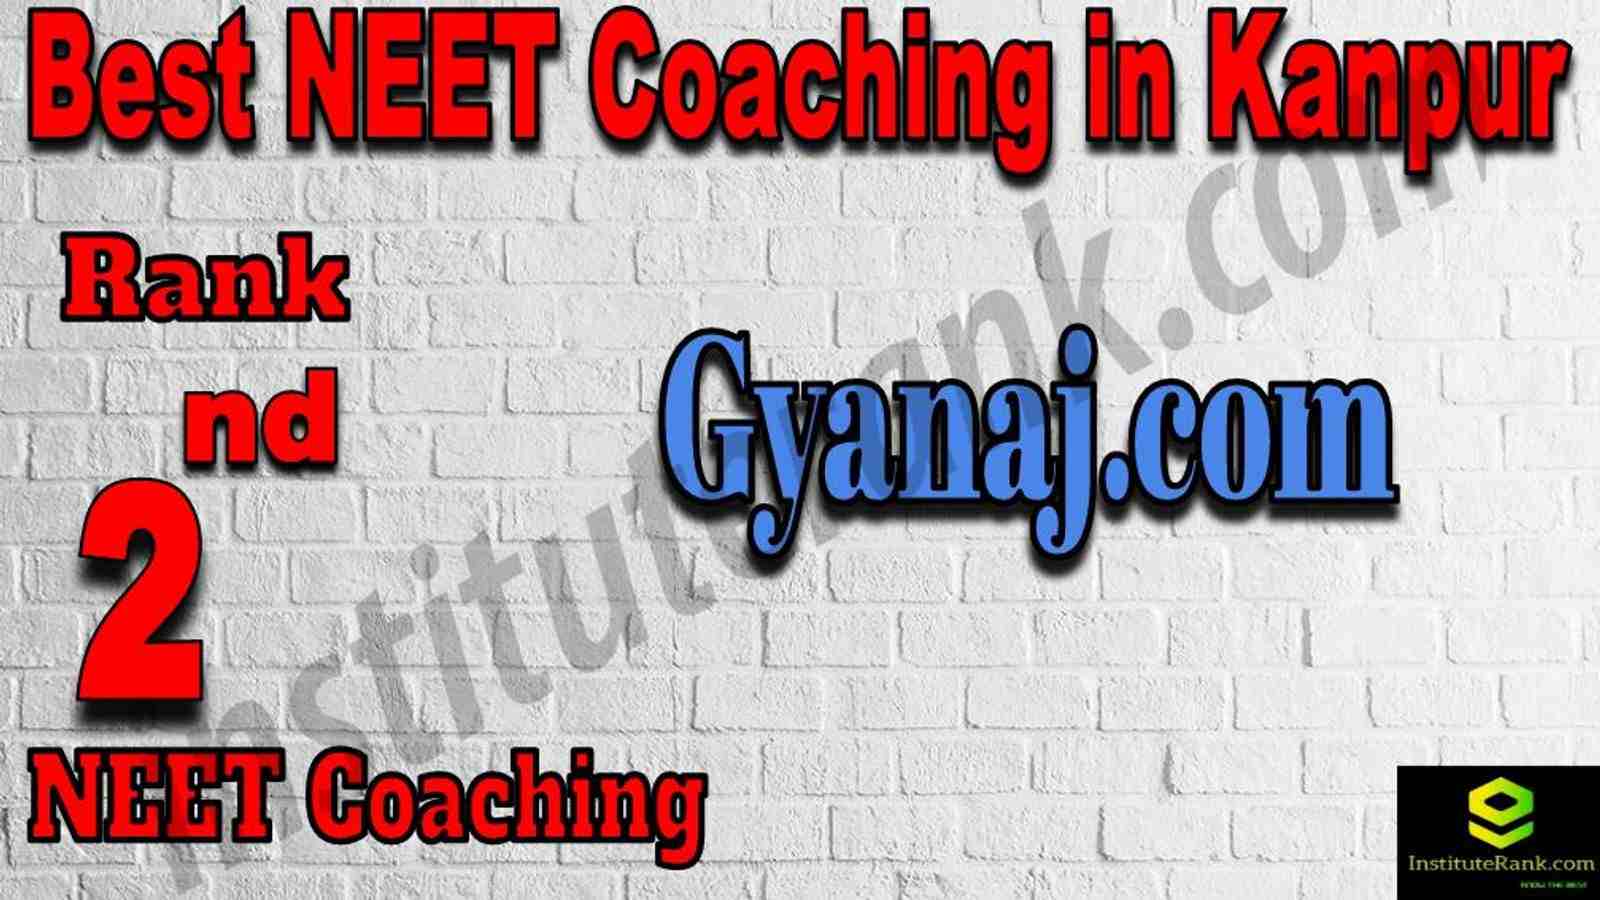 2nd Best Neet Coaching in Kanpur